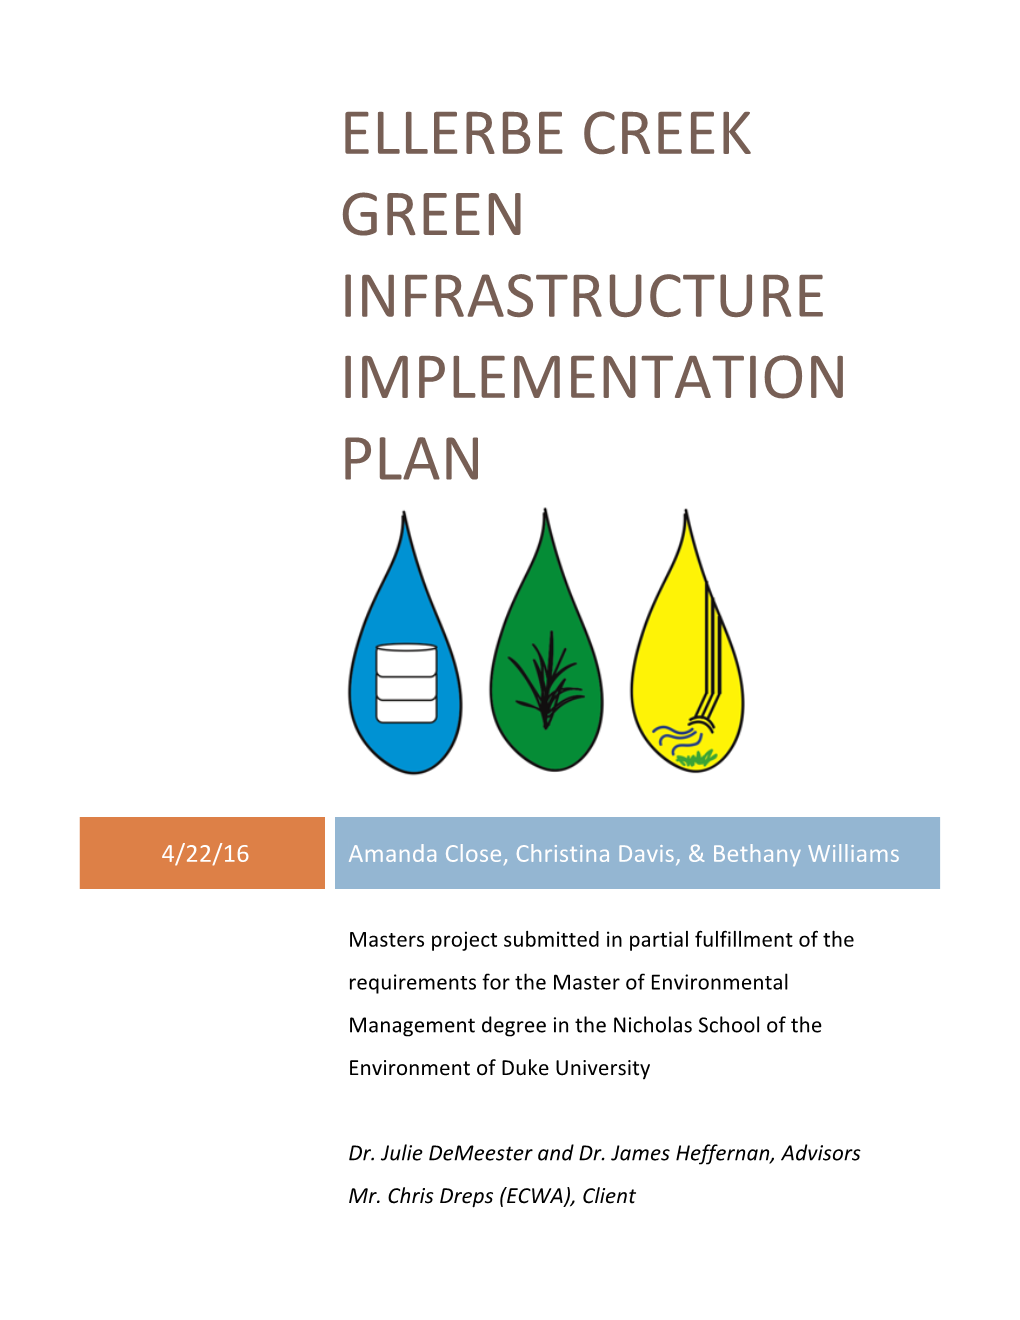 Ellerbe Creek Green Infrastructure Implementation Plan